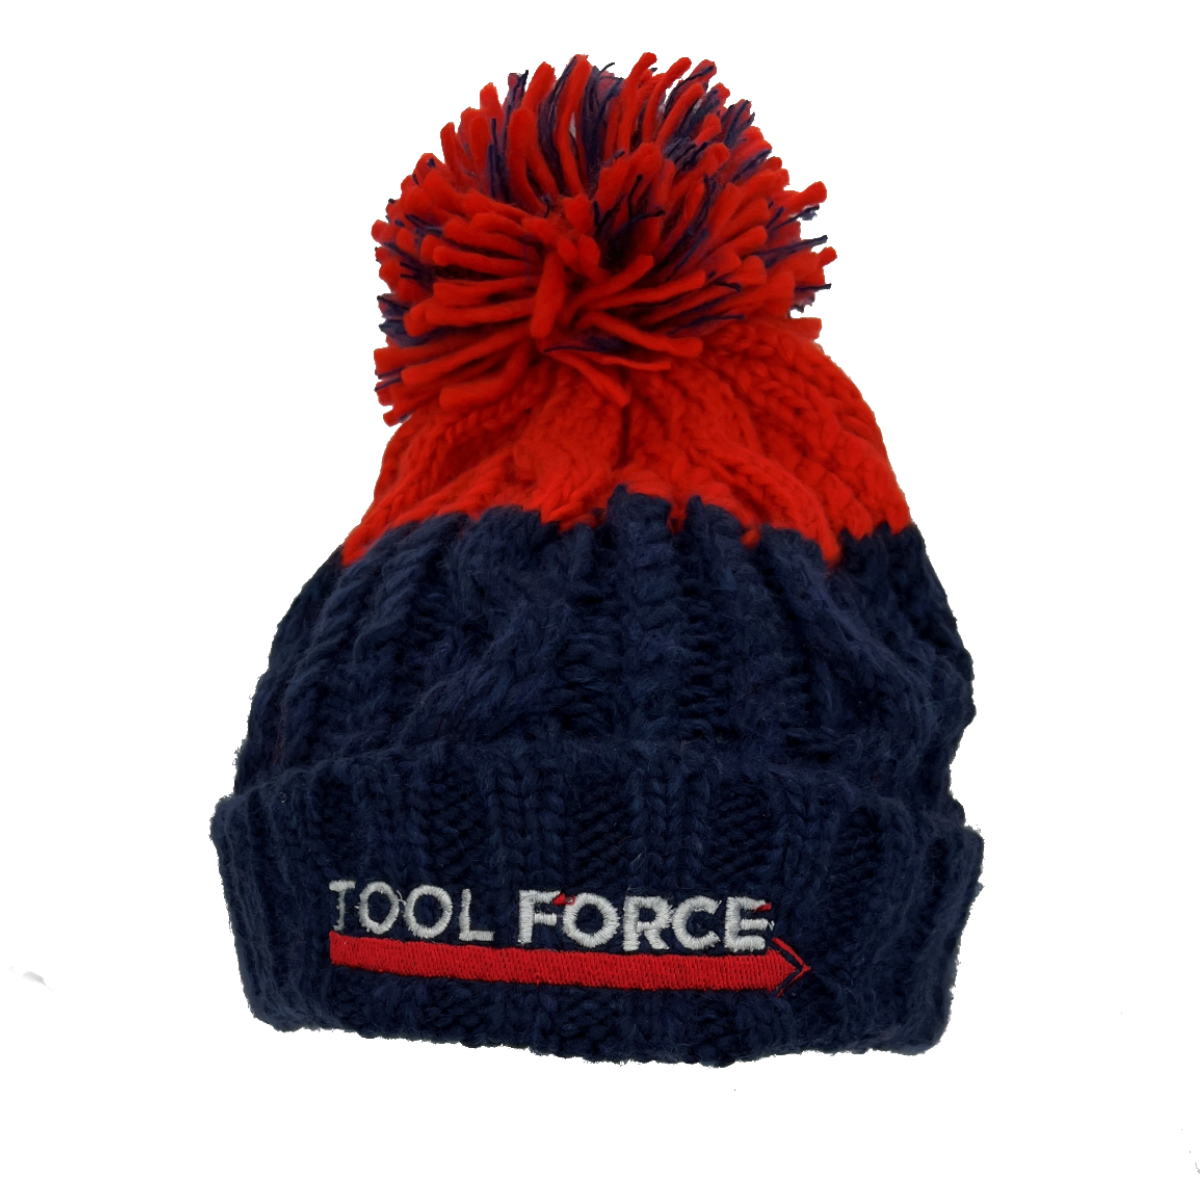 Tool Force Merchandise